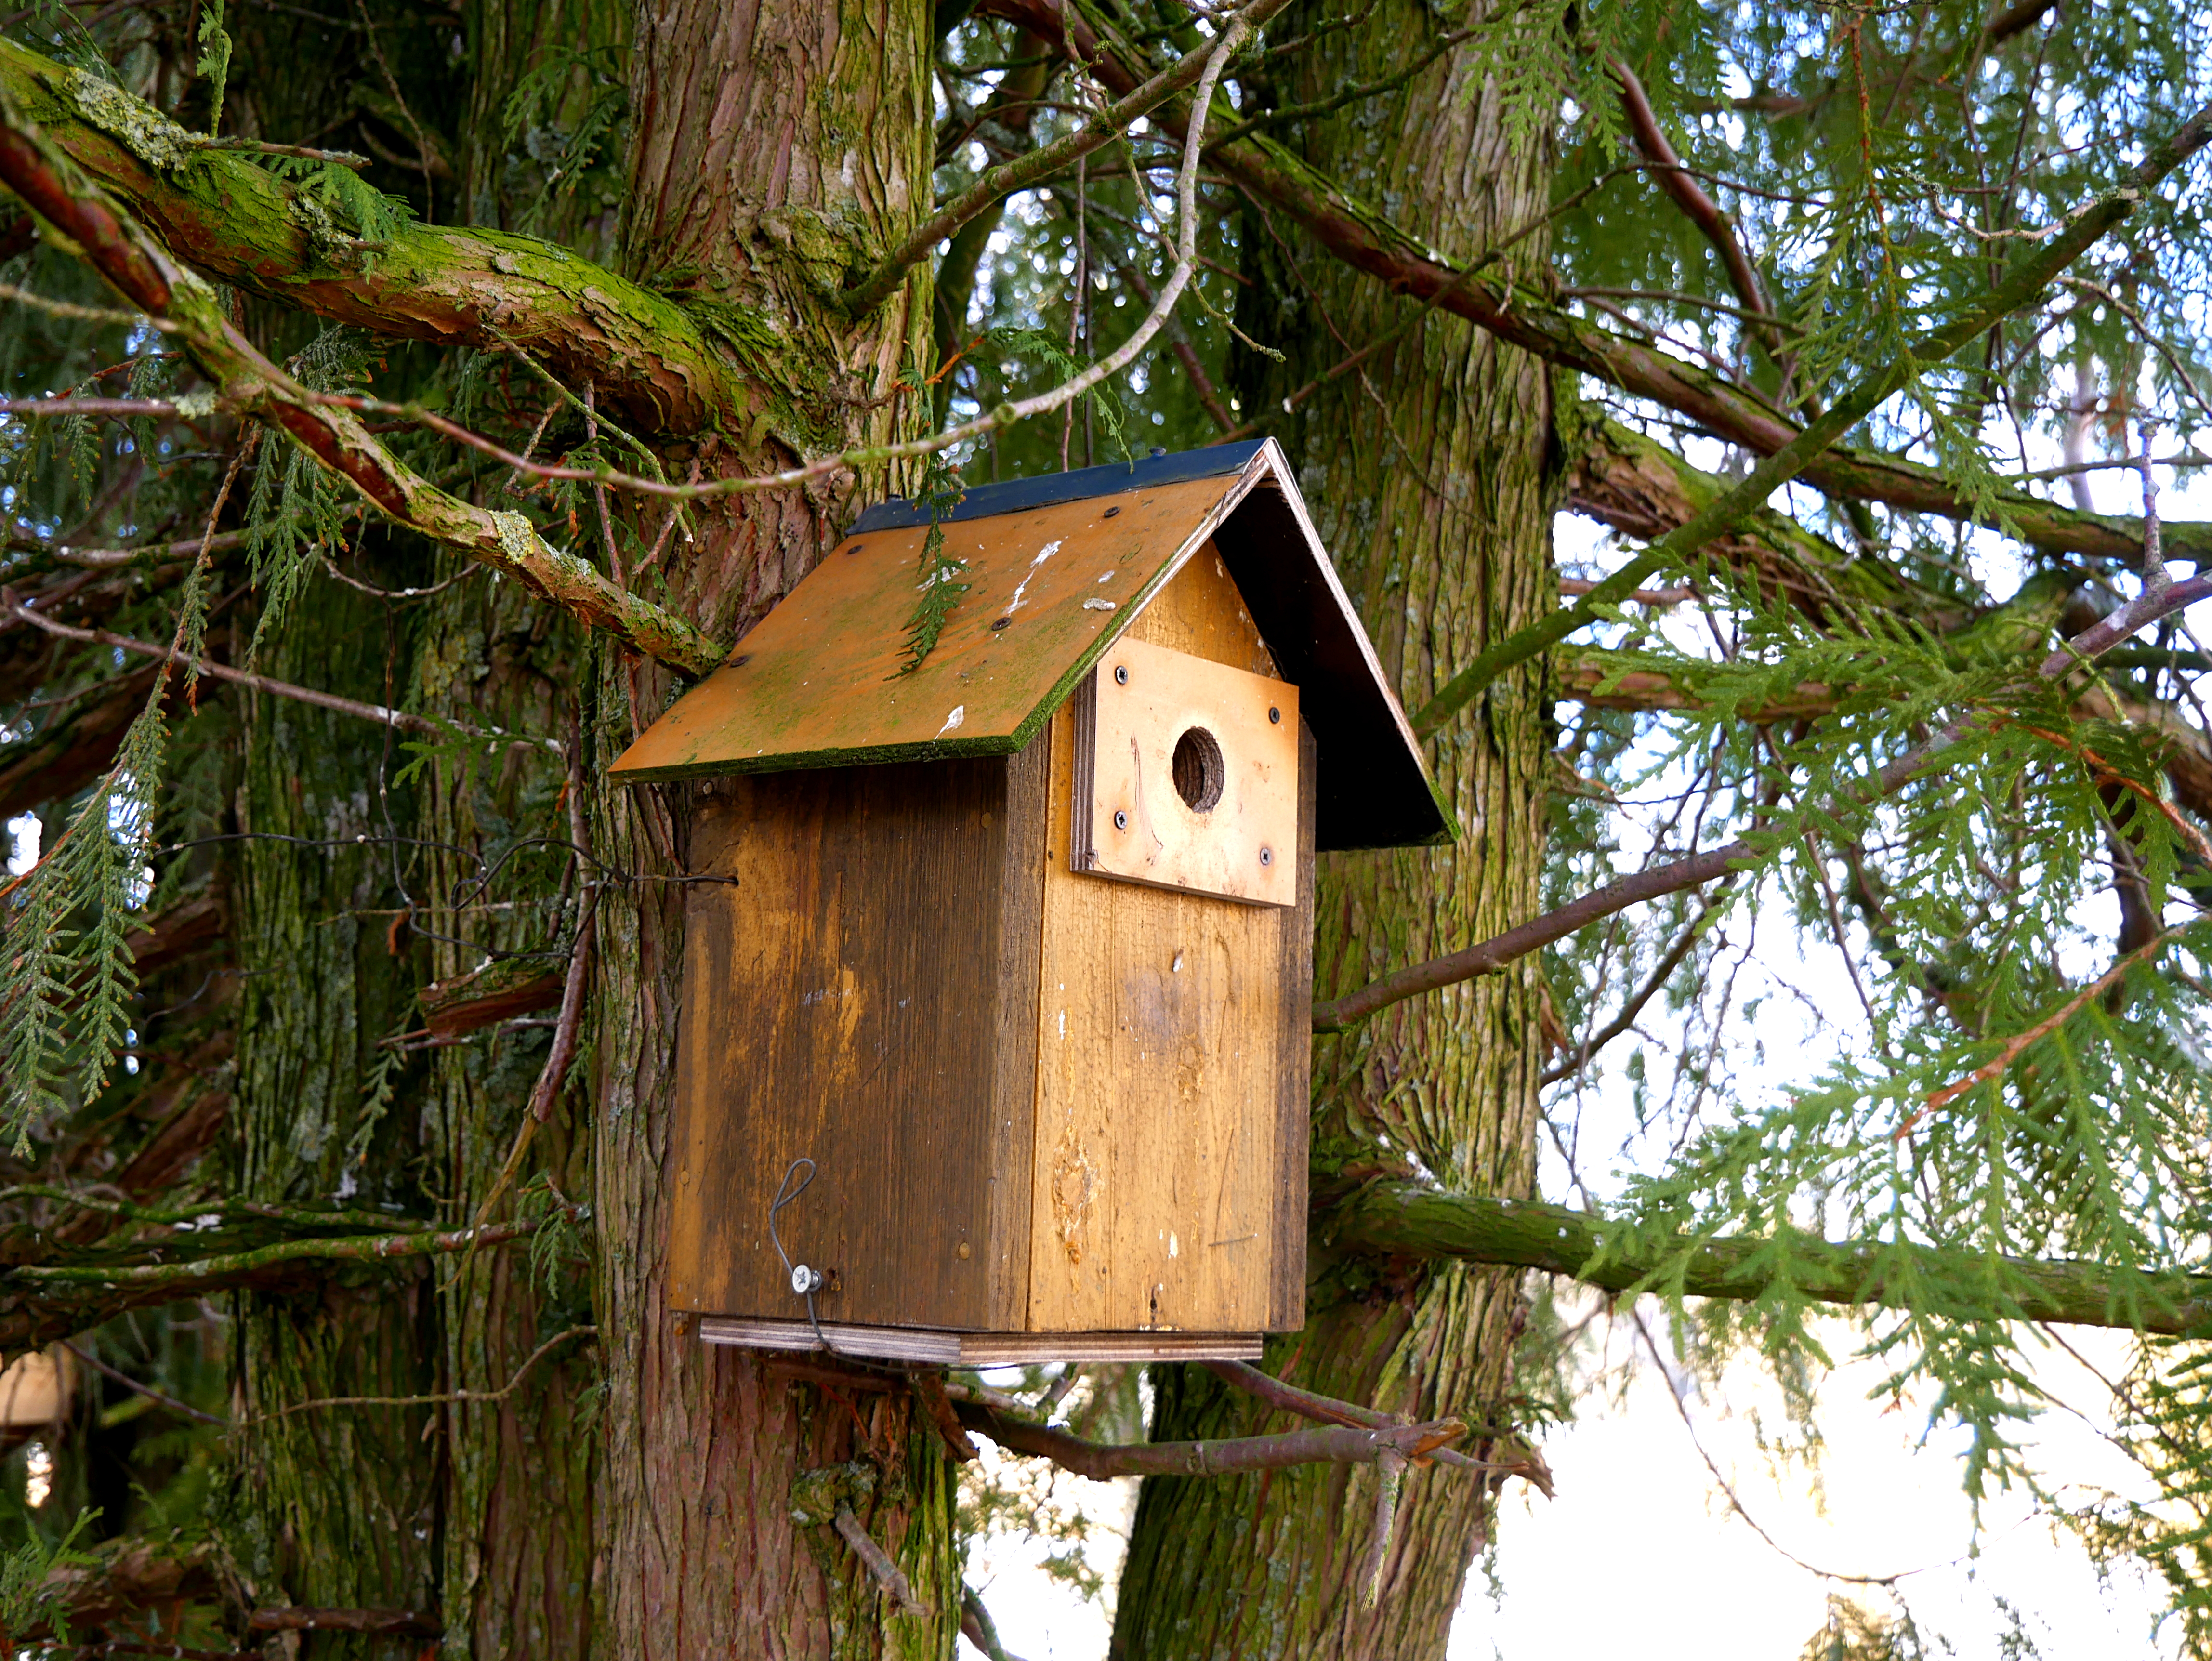 File:Birdhouse in thuja tree.jpg - Wikimedia Commons